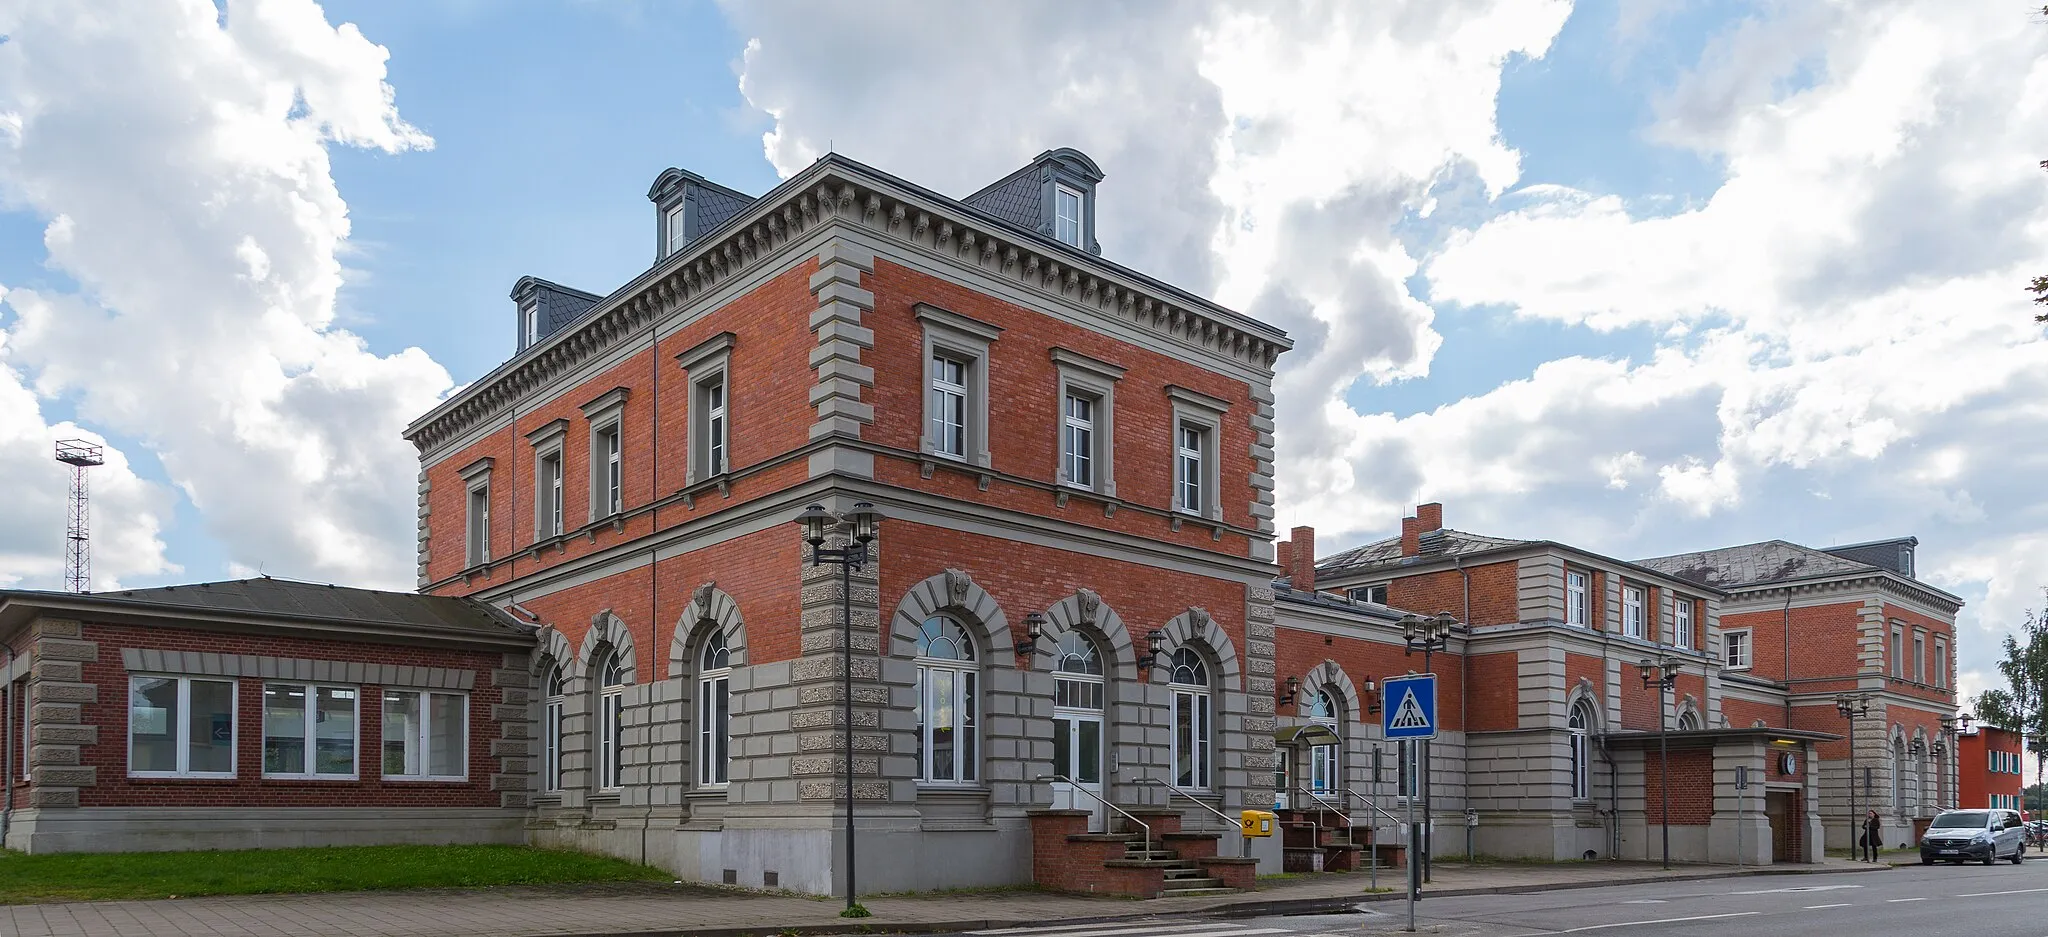 Photo showing: Bützow railway station (Bahnhof Bützow) in Bützow, Landkreis Rostock, Mecklenburg-Vorpommern, Germany. It is a listed cultural heritage monument.